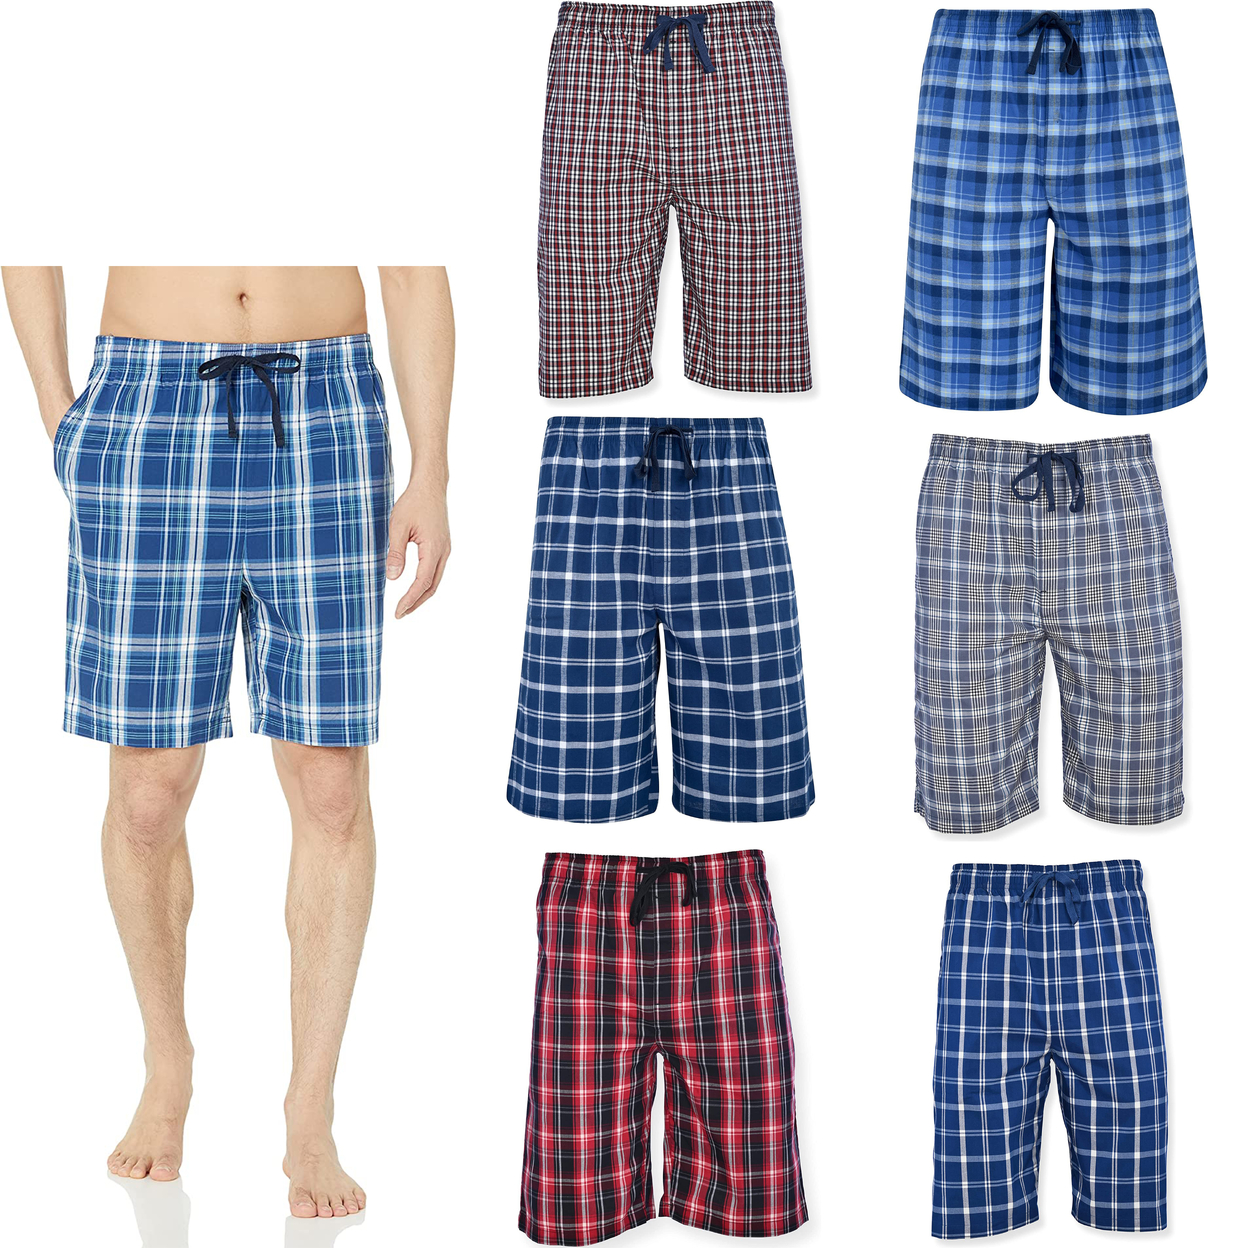 2-Pack: Men's Ultra Soft Plaid Lounge Pajama Sleep Wear Shorts - Black & Grey, Large